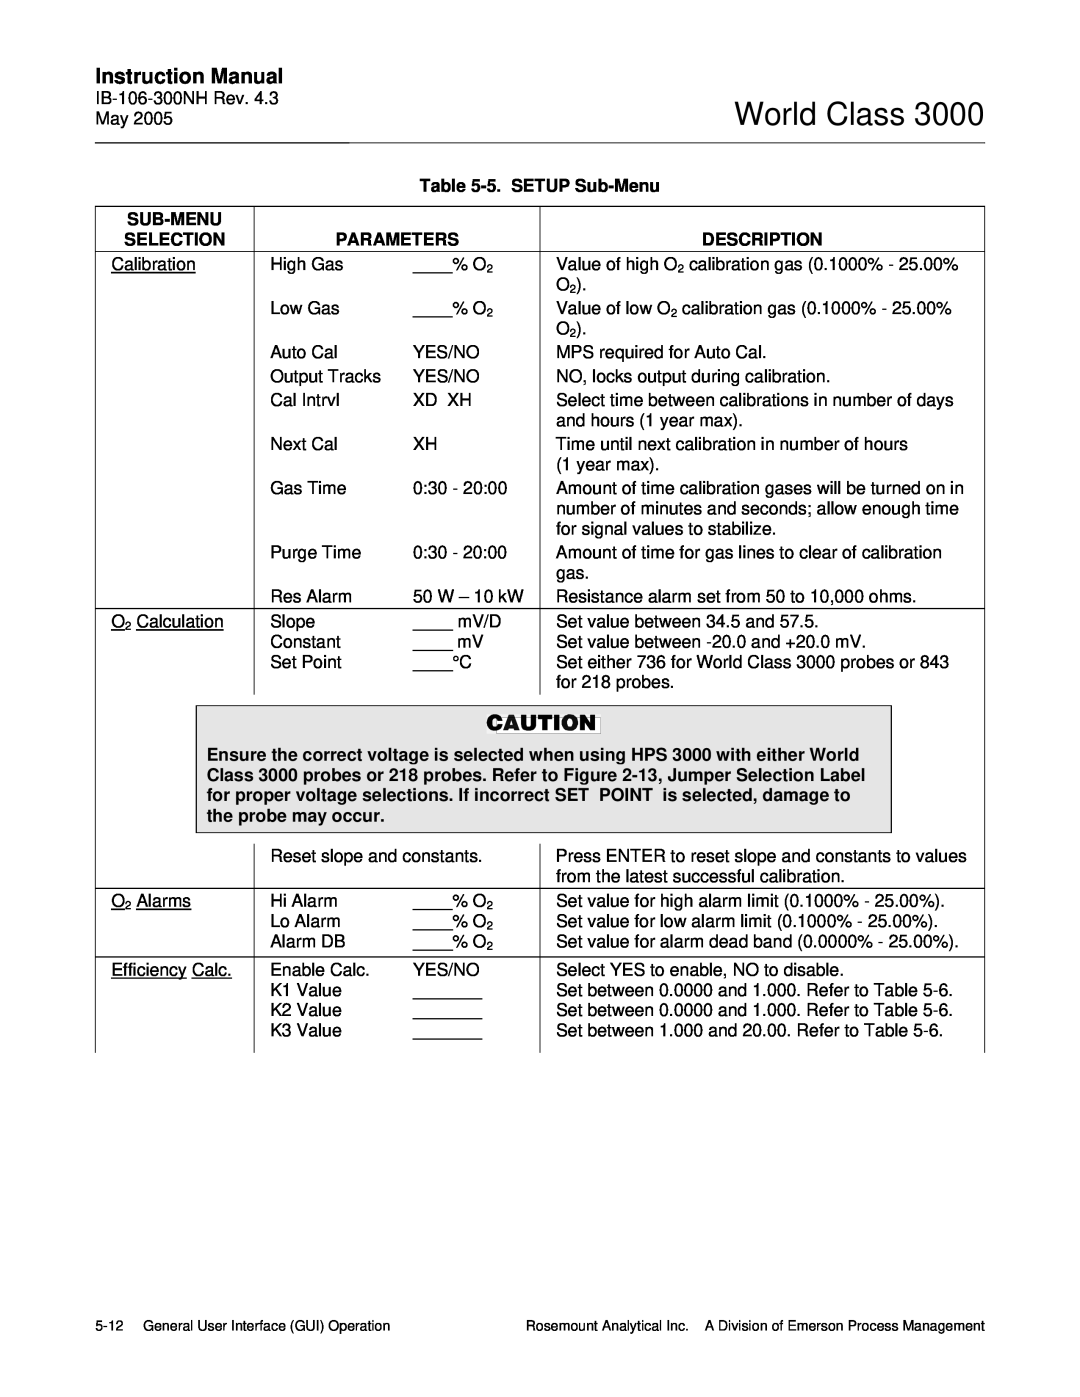 Emerson 3000 instruction manual World Class, Instruction Manual, 5.SETUP Sub-Menu, Selection, Parameters, Description 